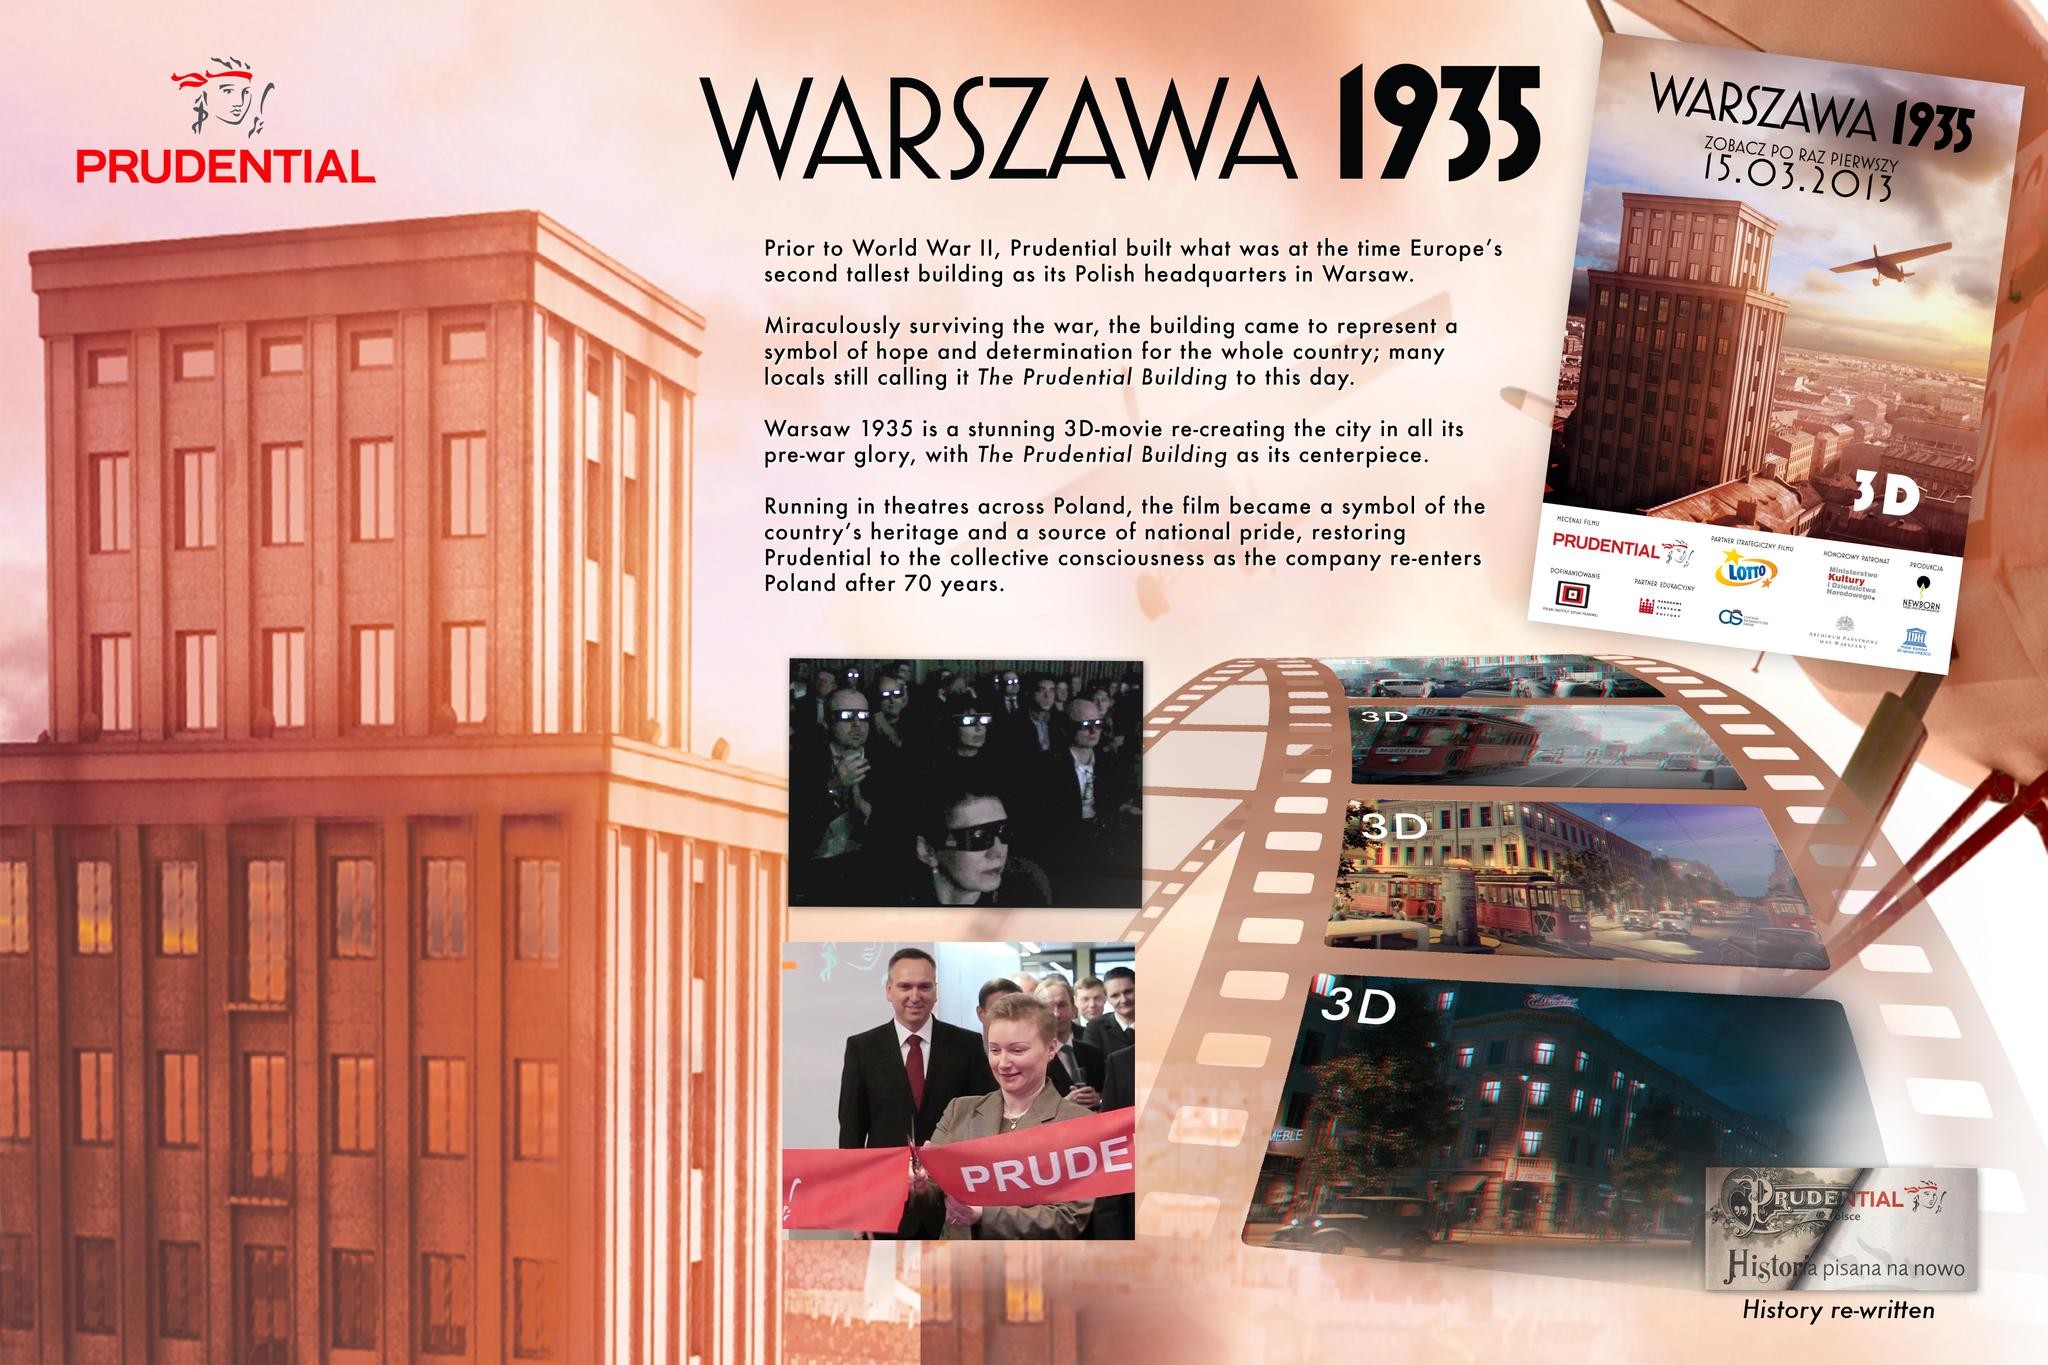 WARSAW 1935